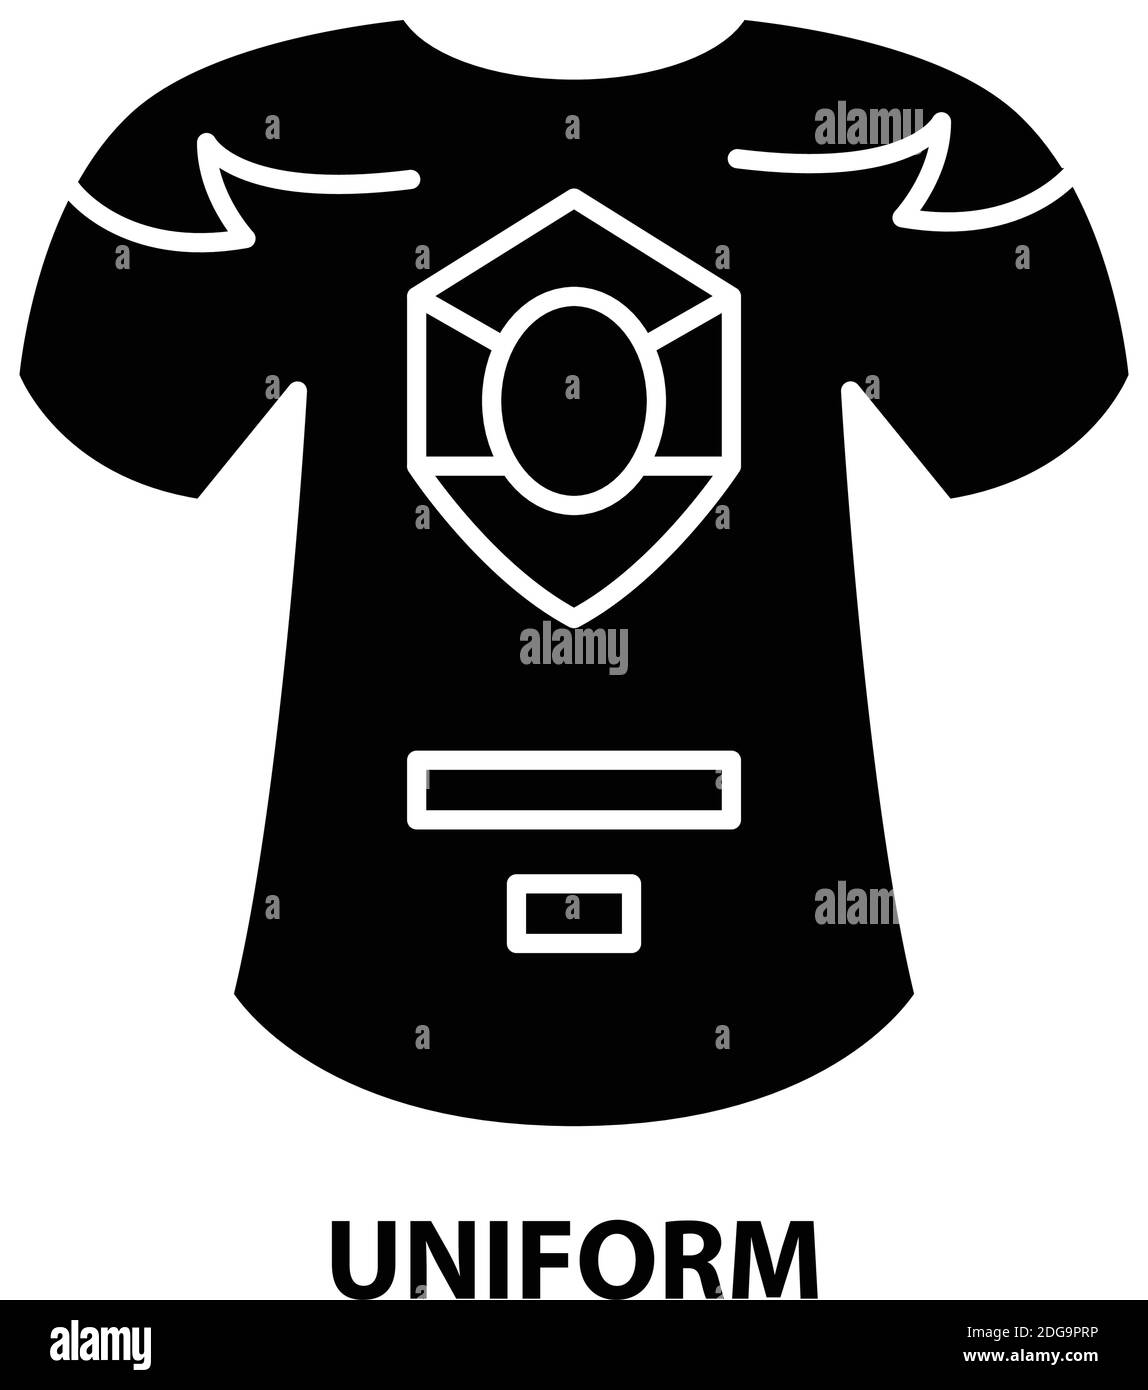 uniform icon, black vector sign with editable strokes, concept illustration Stock Vector